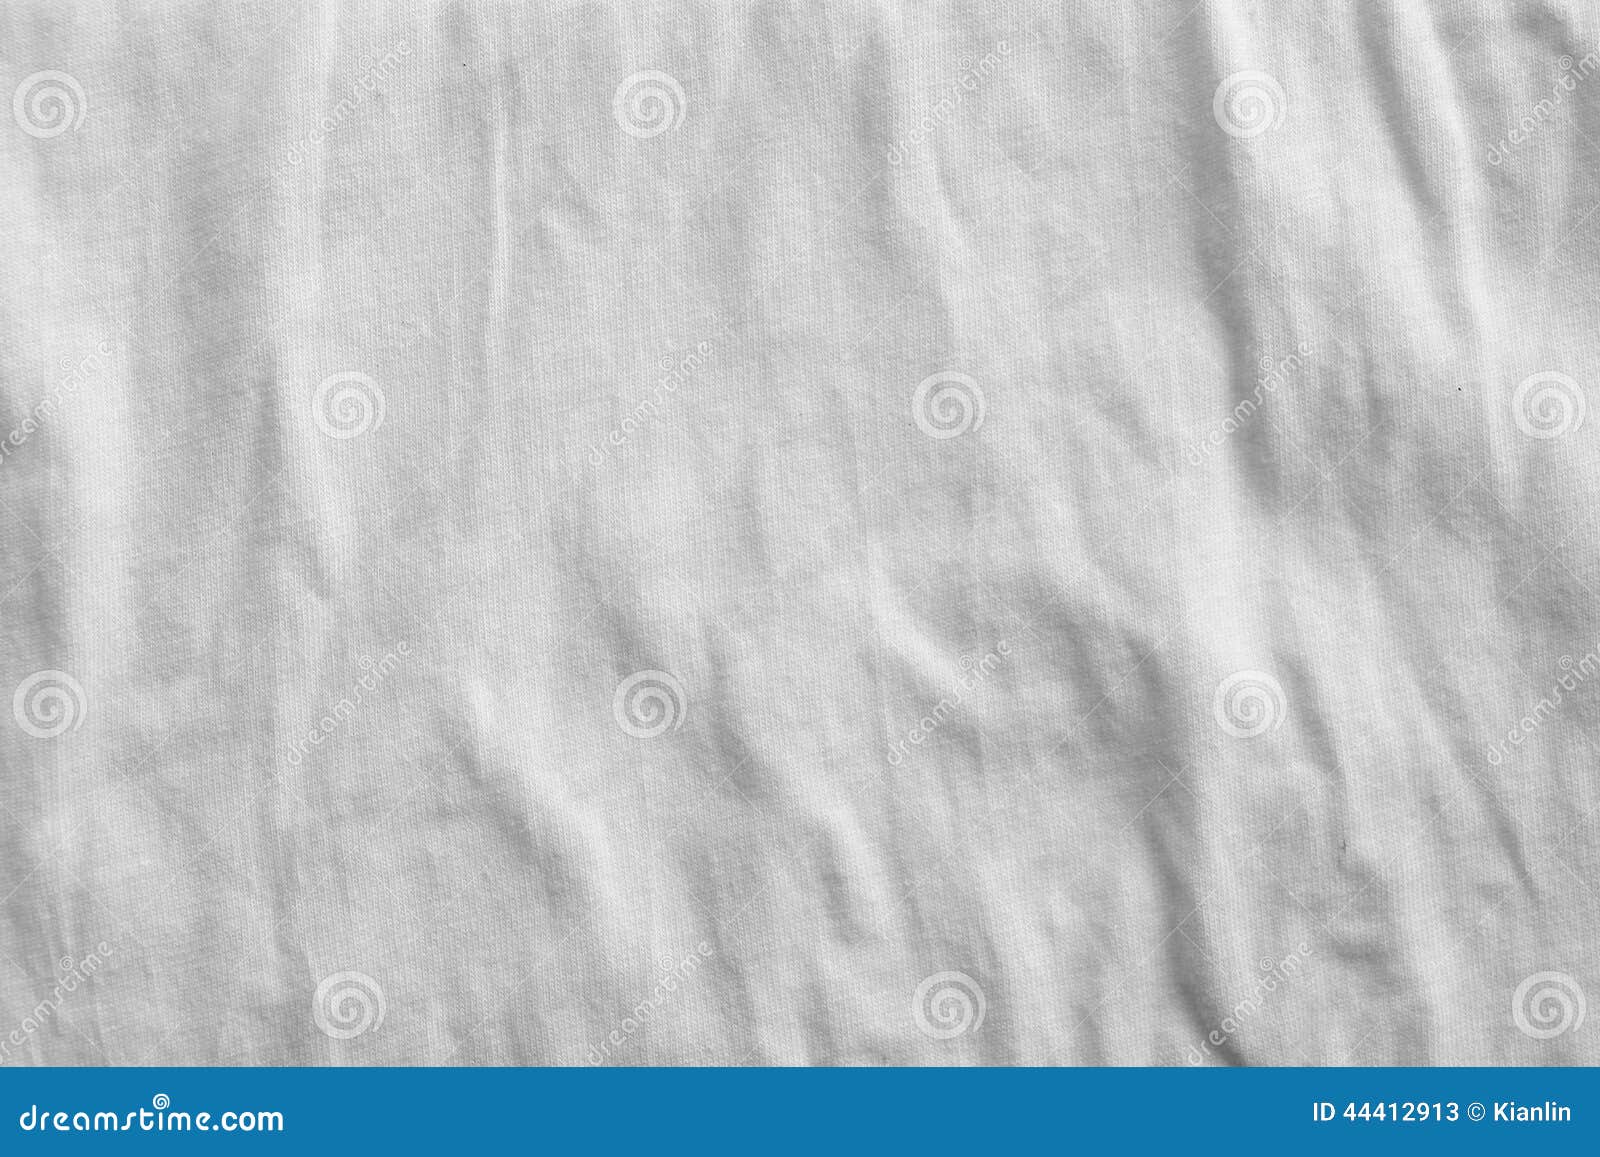 white cloth background